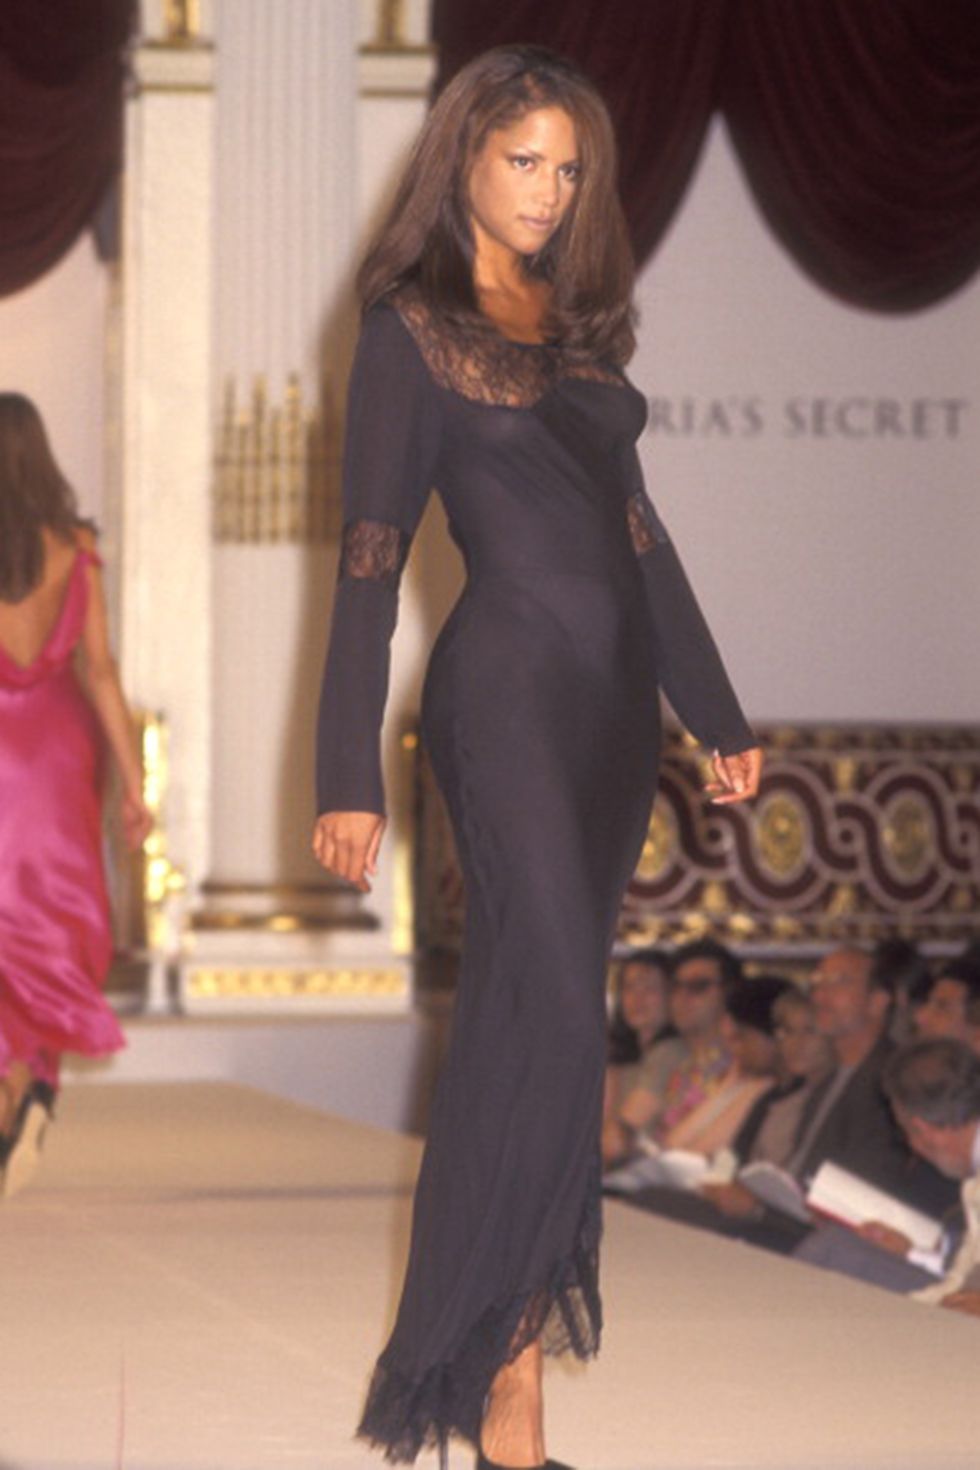 Victoria's Secret Fashion Show 2003 - Runway - Part 1